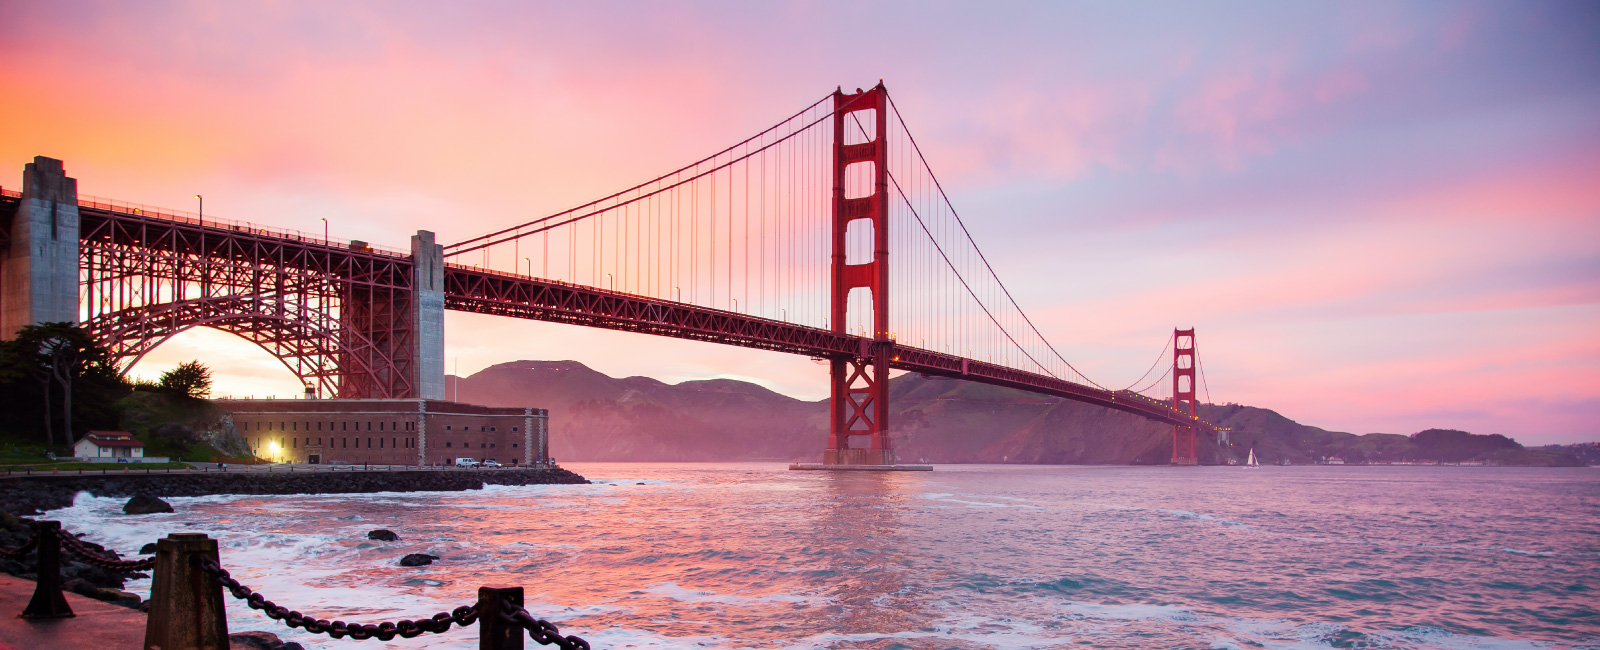 Golden Gate Bridge at sunset, San Francisco 